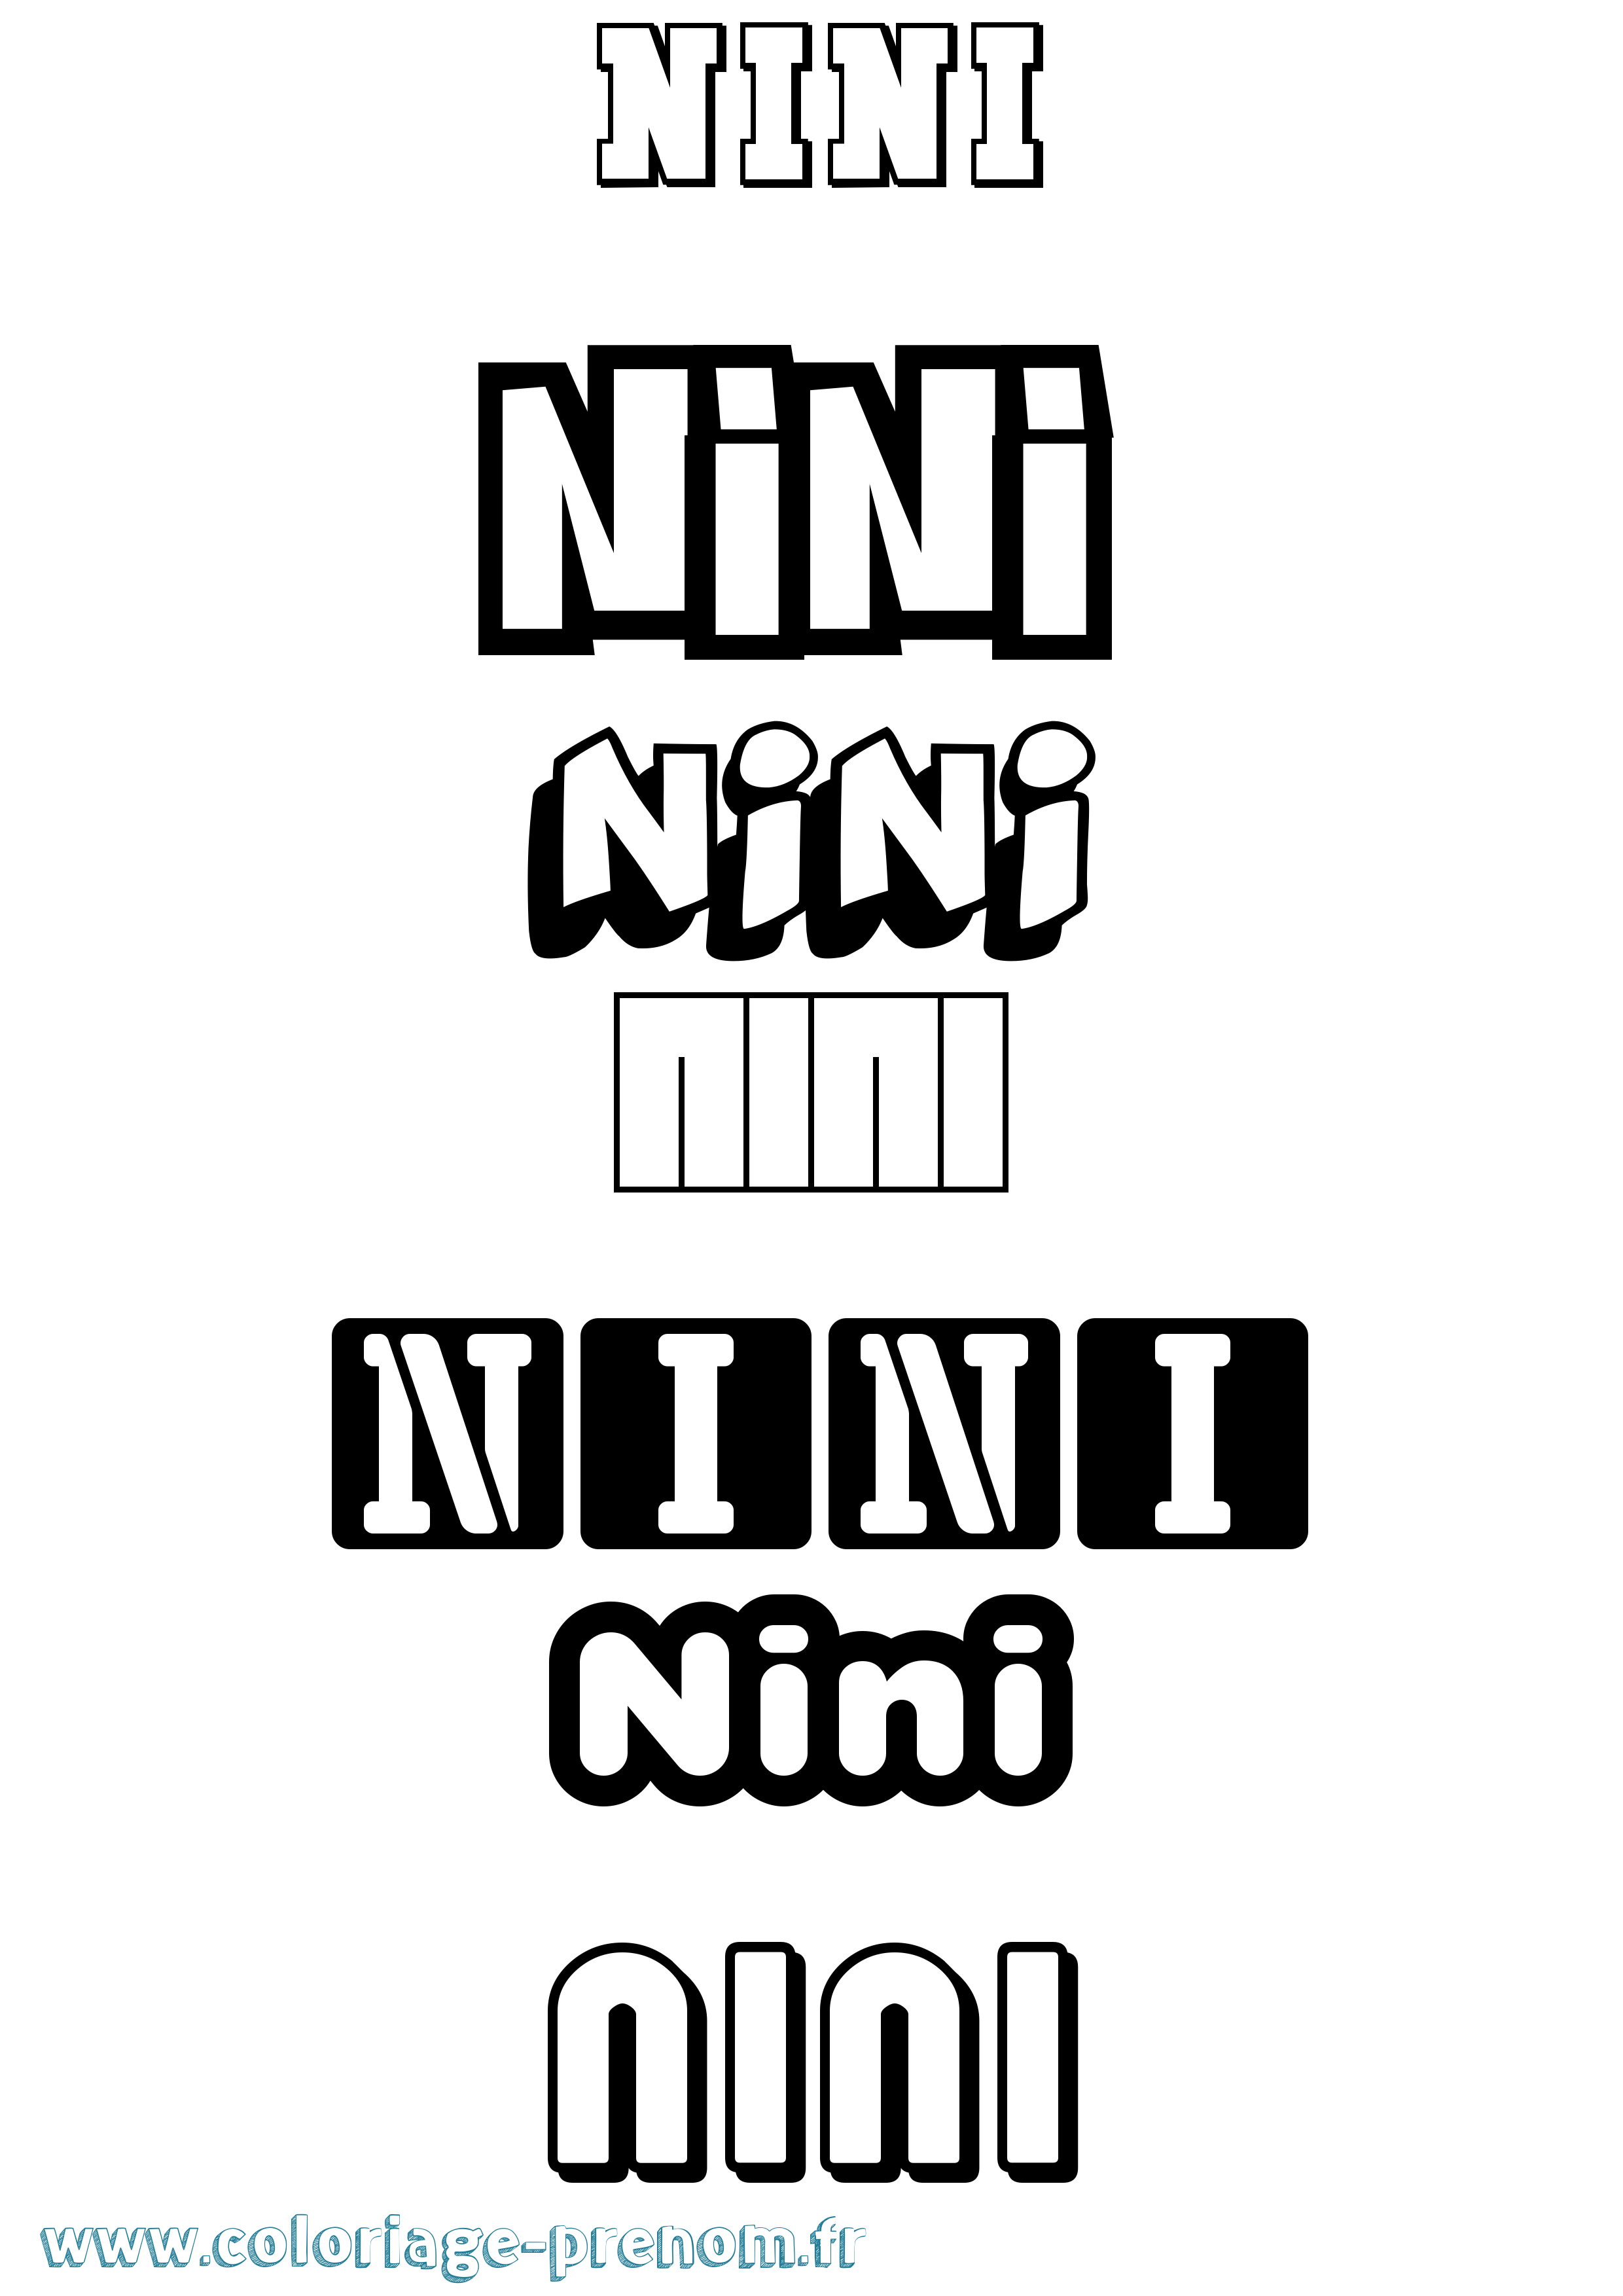 Coloriage prénom Nini Simple